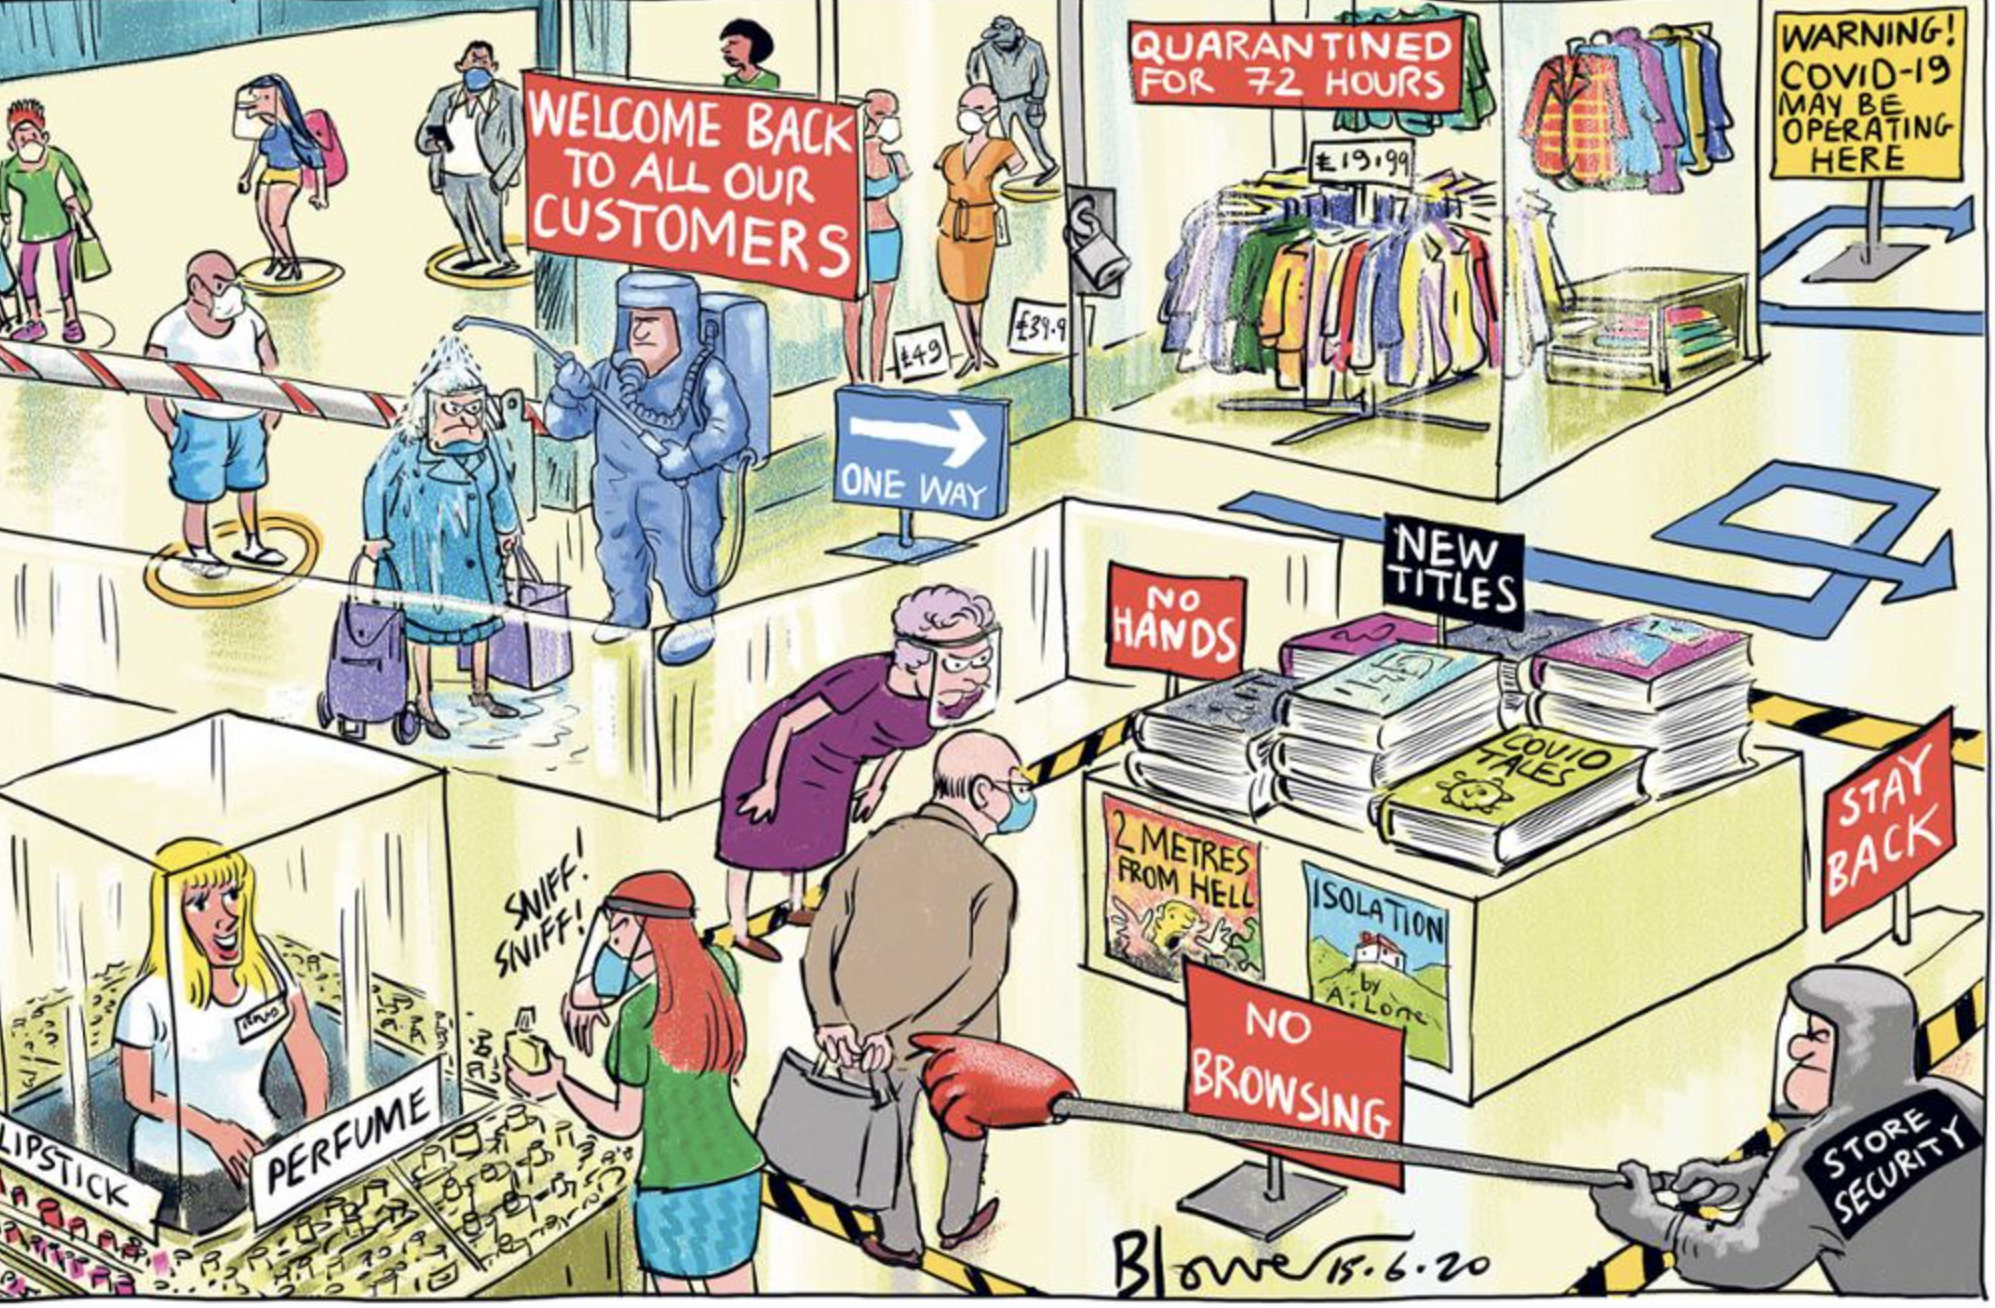 2020 Retailers in trouble thread - Page 142 - News, Politics & Economics - PistonHeads